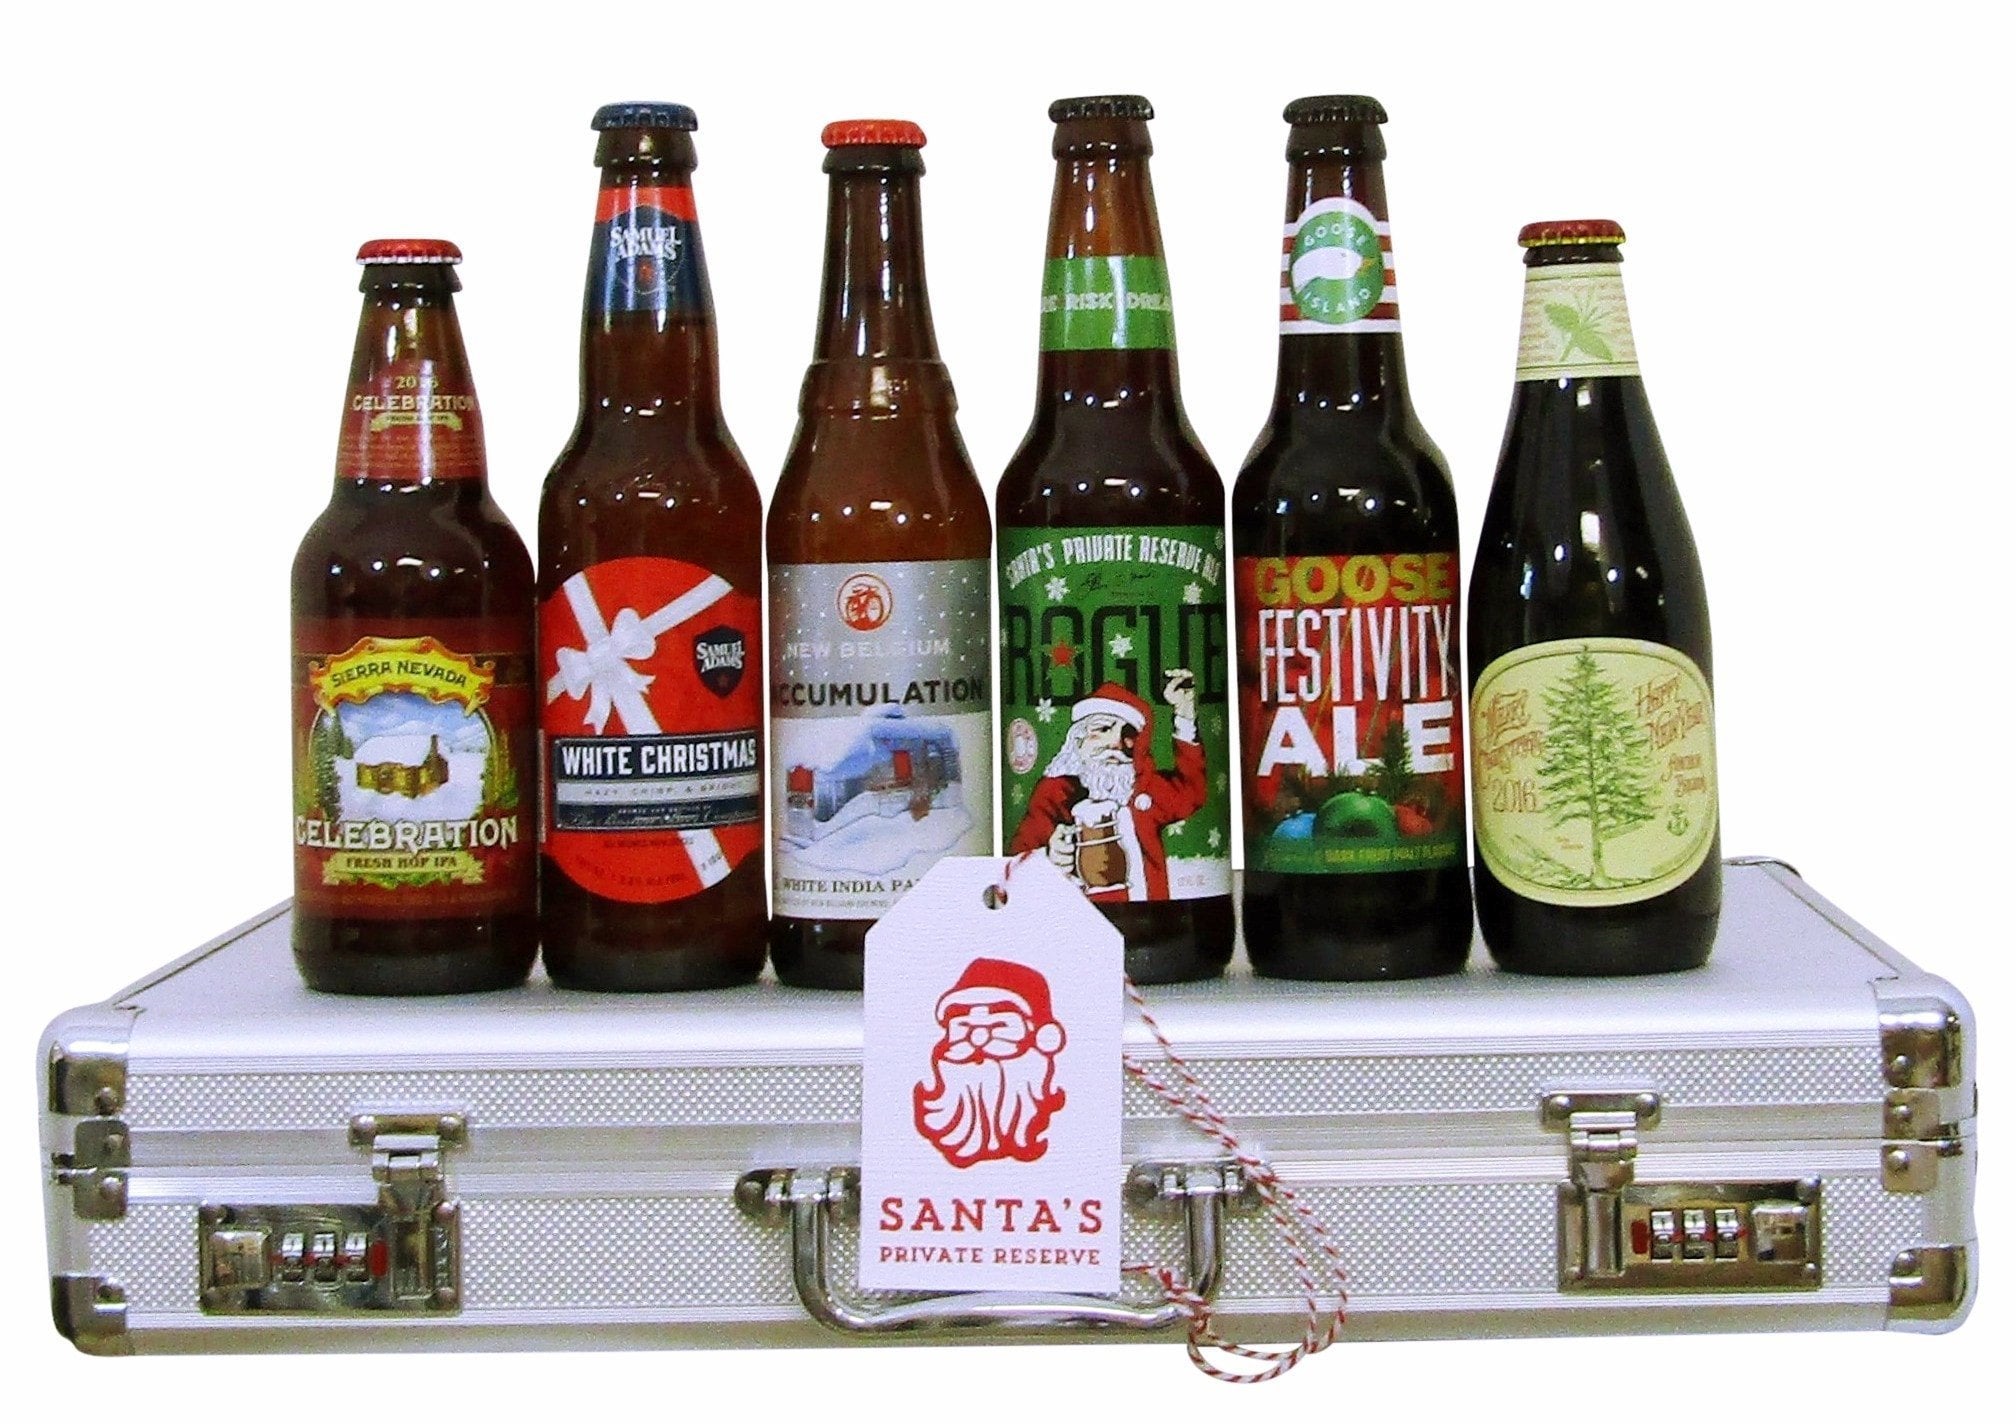 Santa's Private Beer Reserve